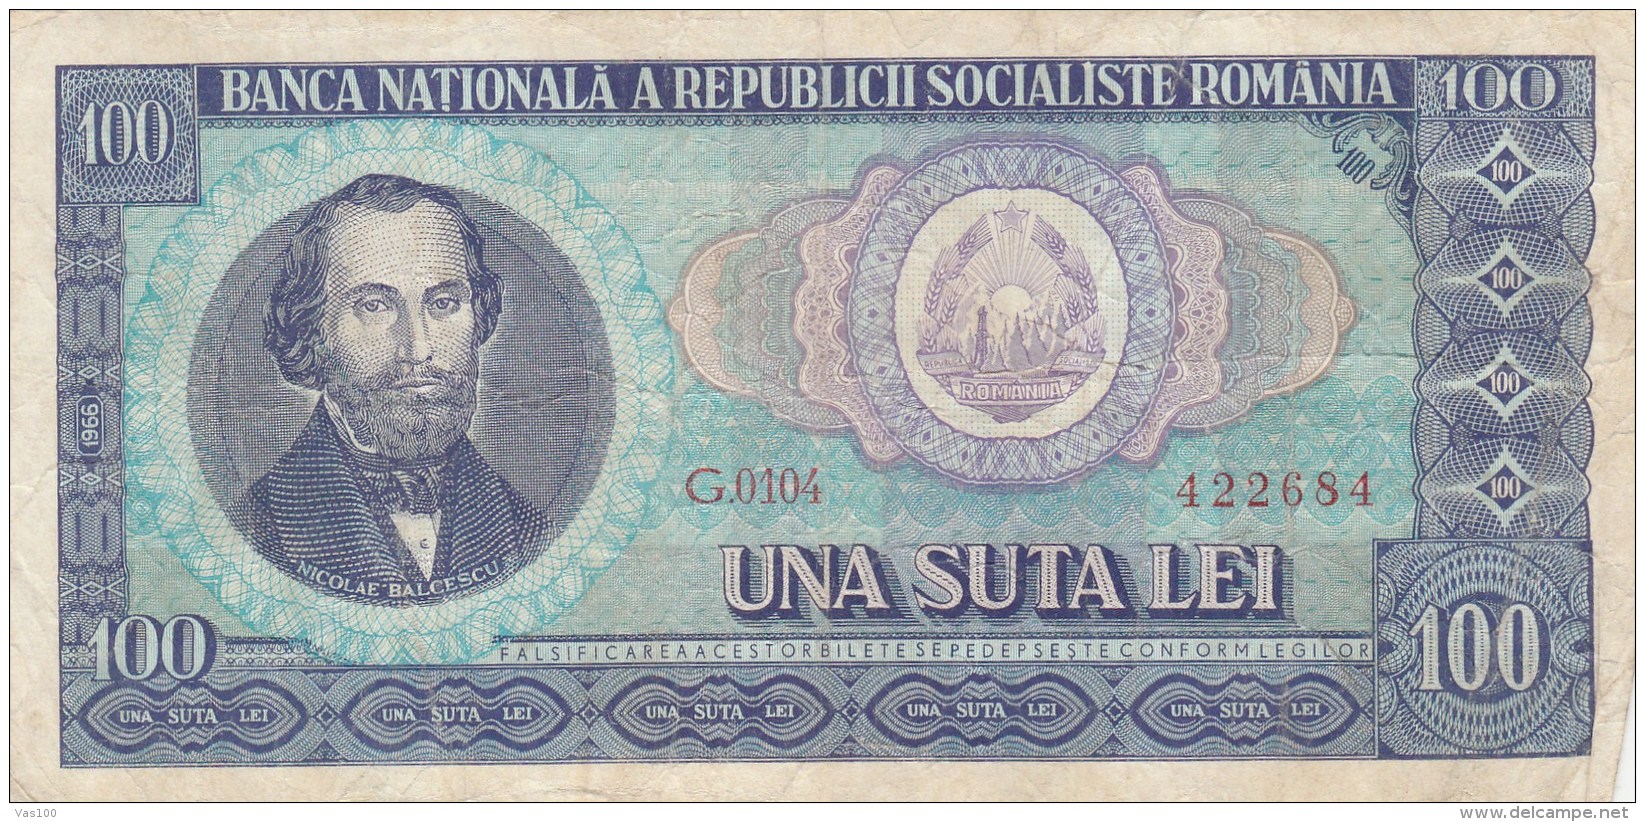 100 LEI, NICOLAE BALCESCU, 1966, PAPER BANKNOTE,ROMANIA. - Roumanie